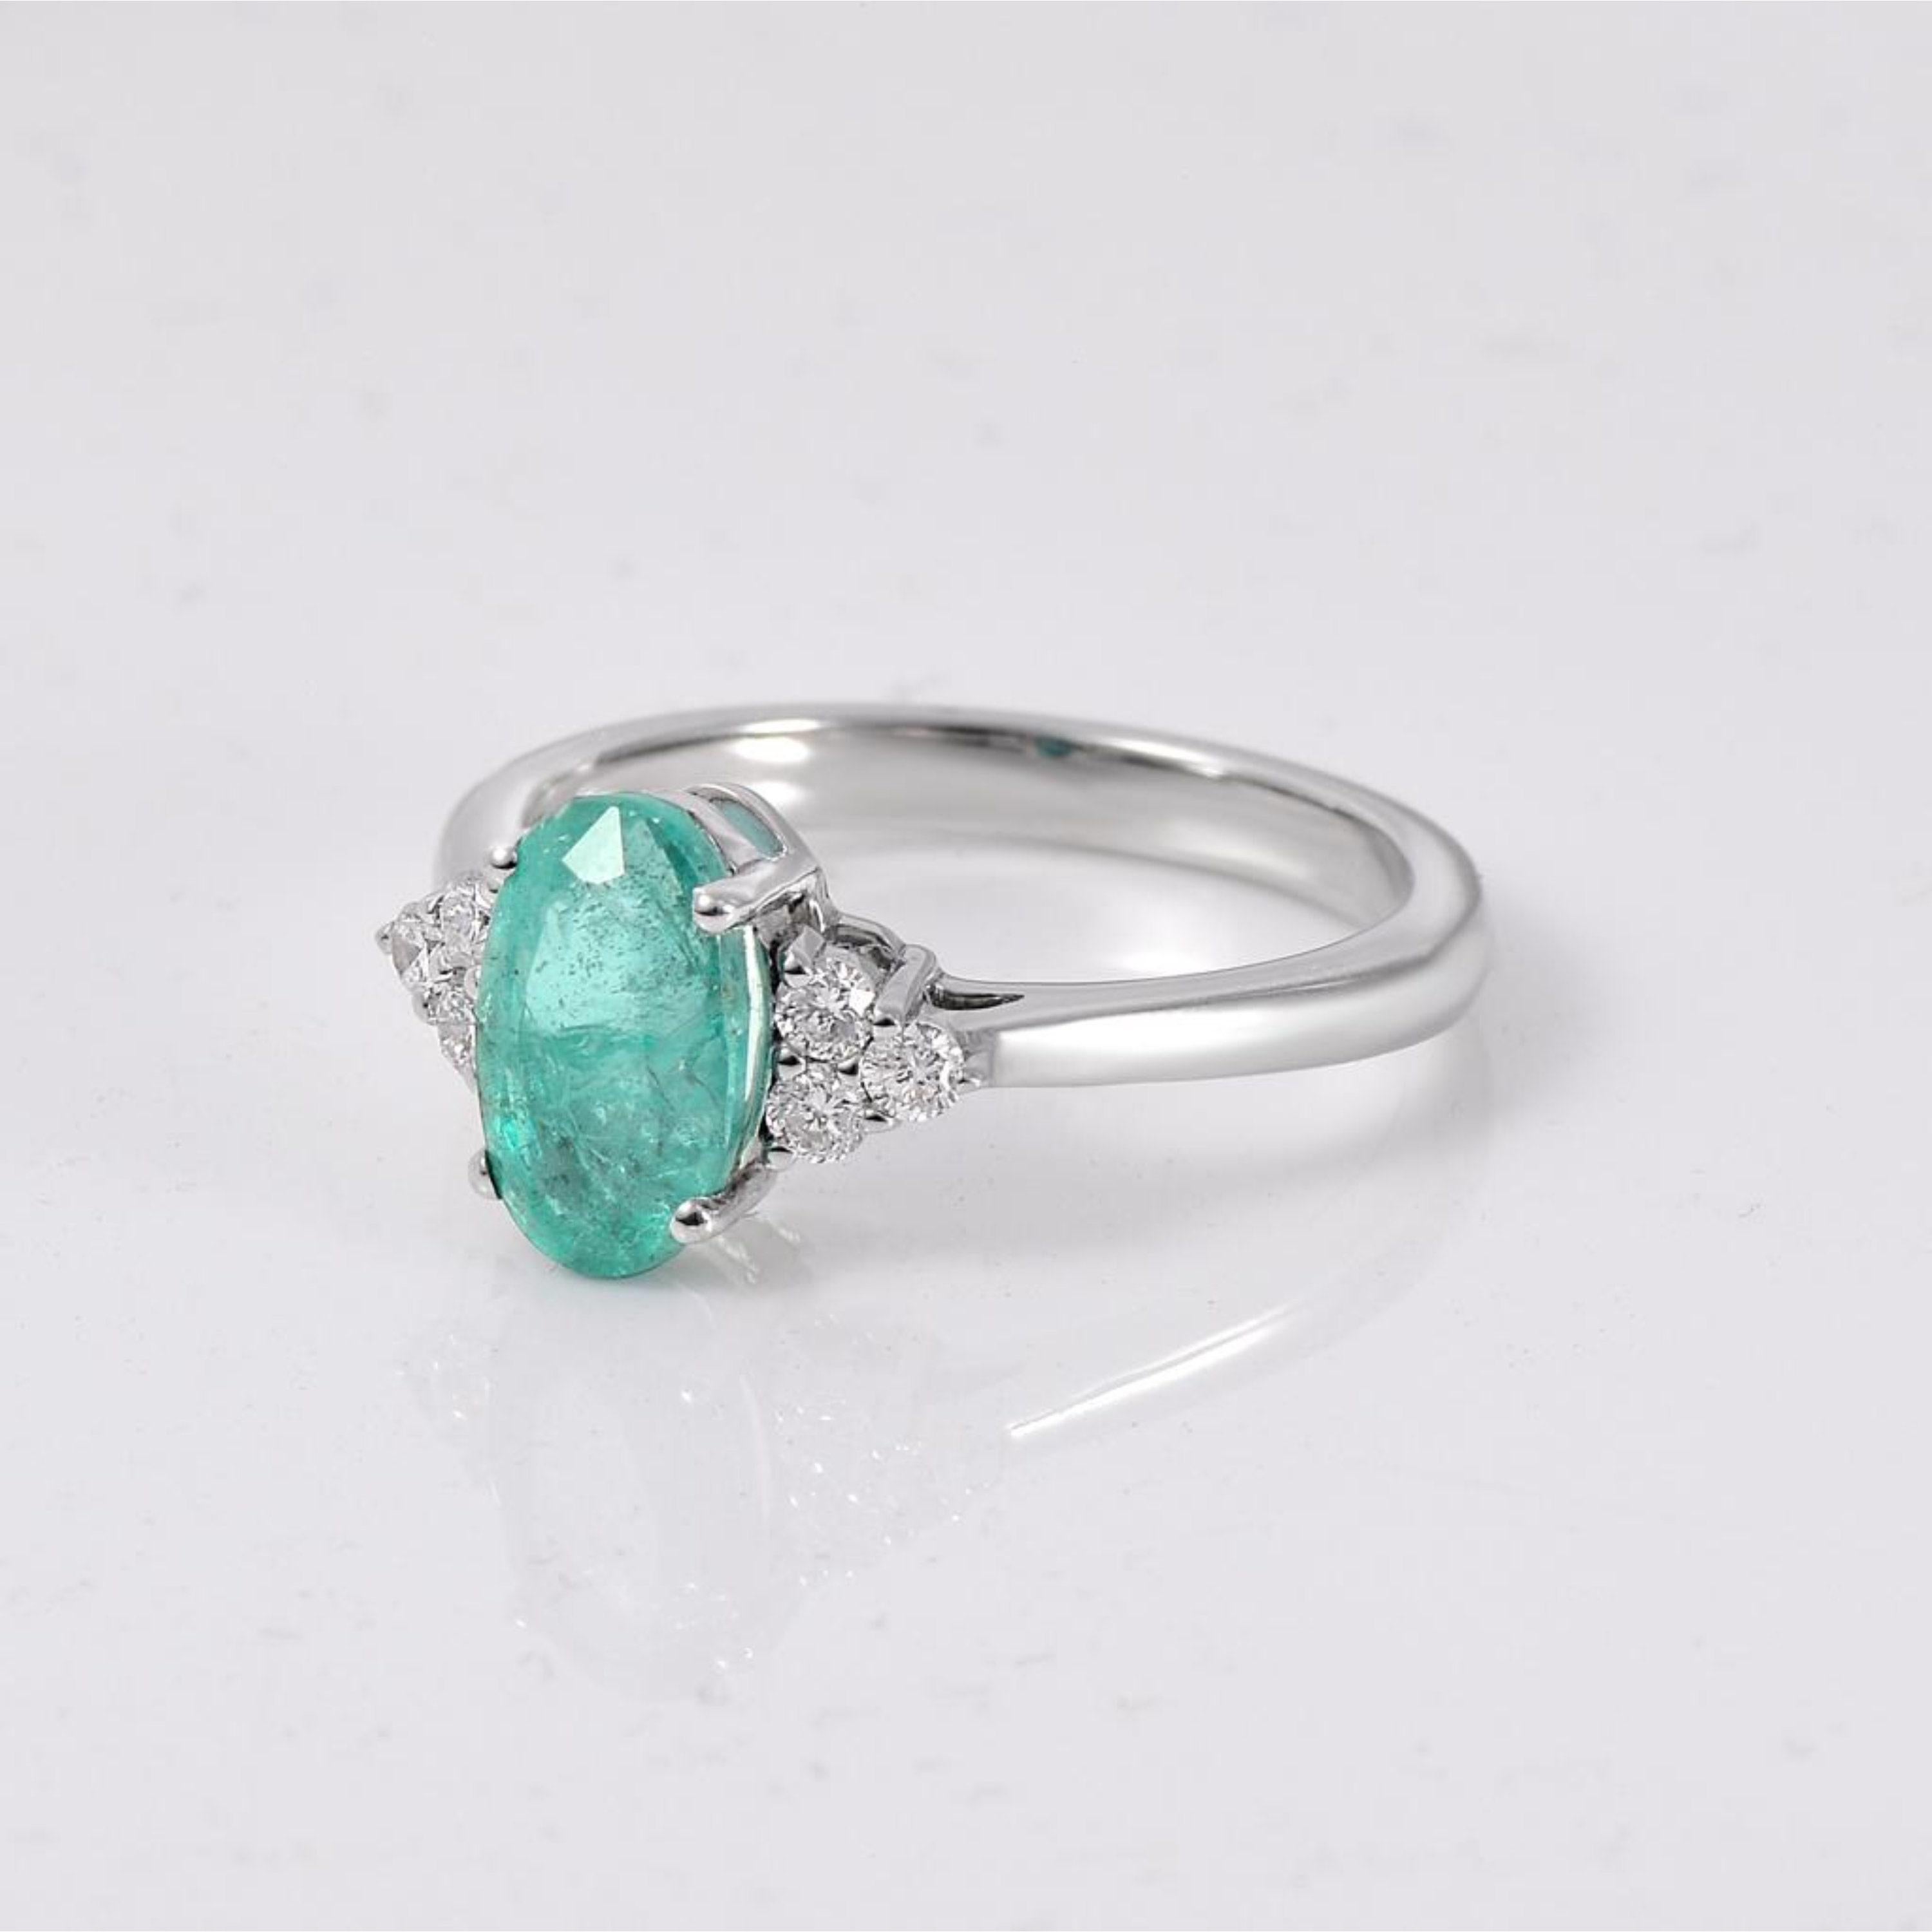 For Sale:  Antique White Gold 2 Carat Emerald Engagement Ring, Unique Diamond Wedding Ring 4